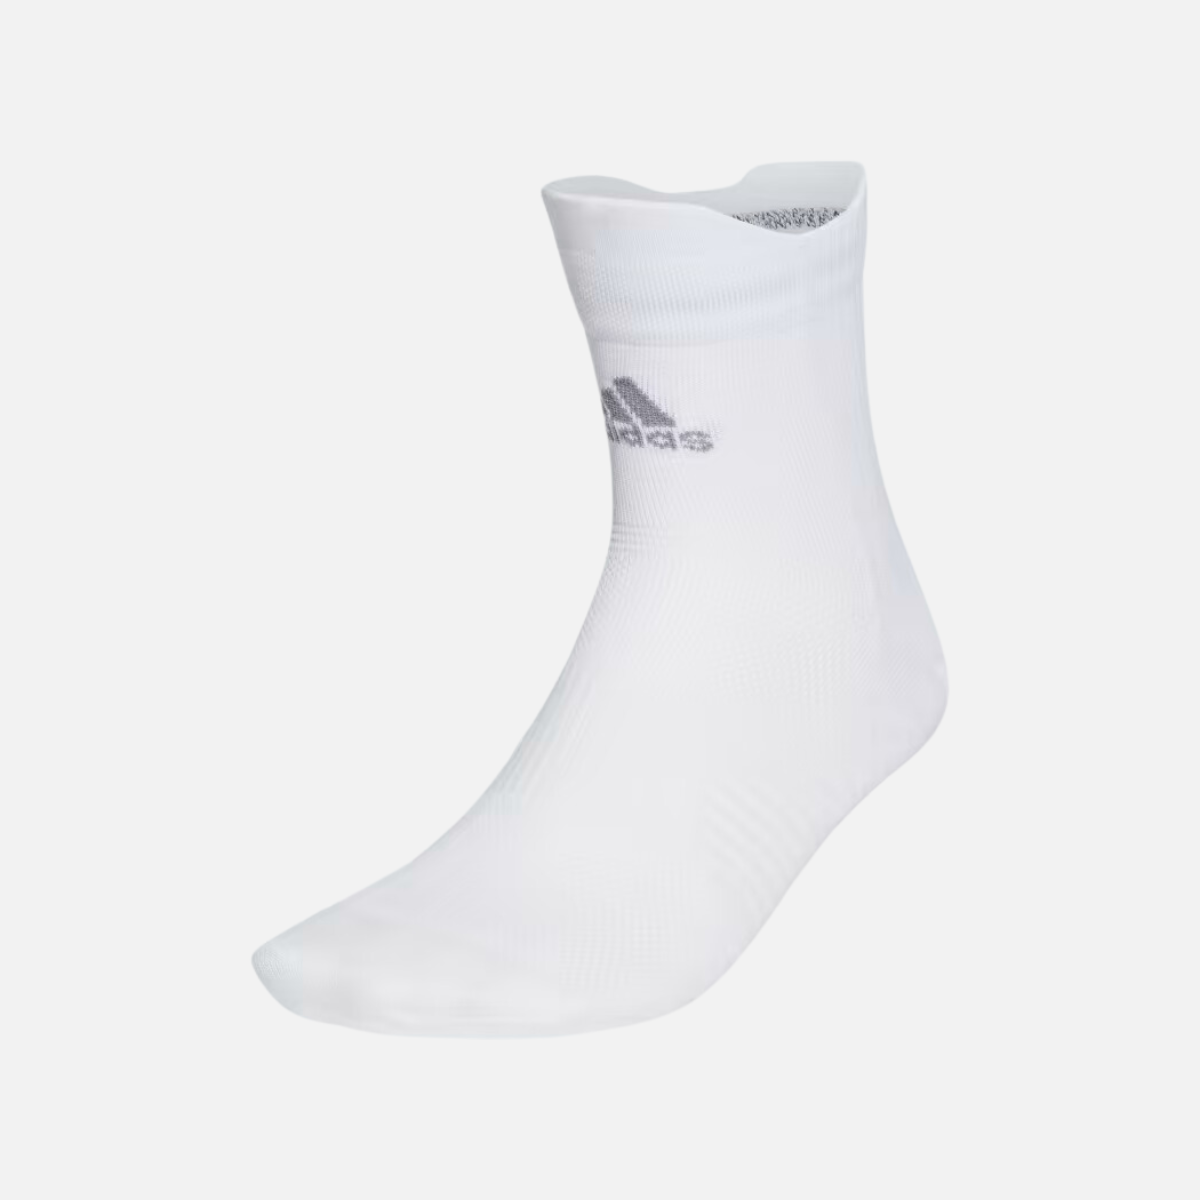 Adidas Adizero Running Ankle Socks -White/Grey Three